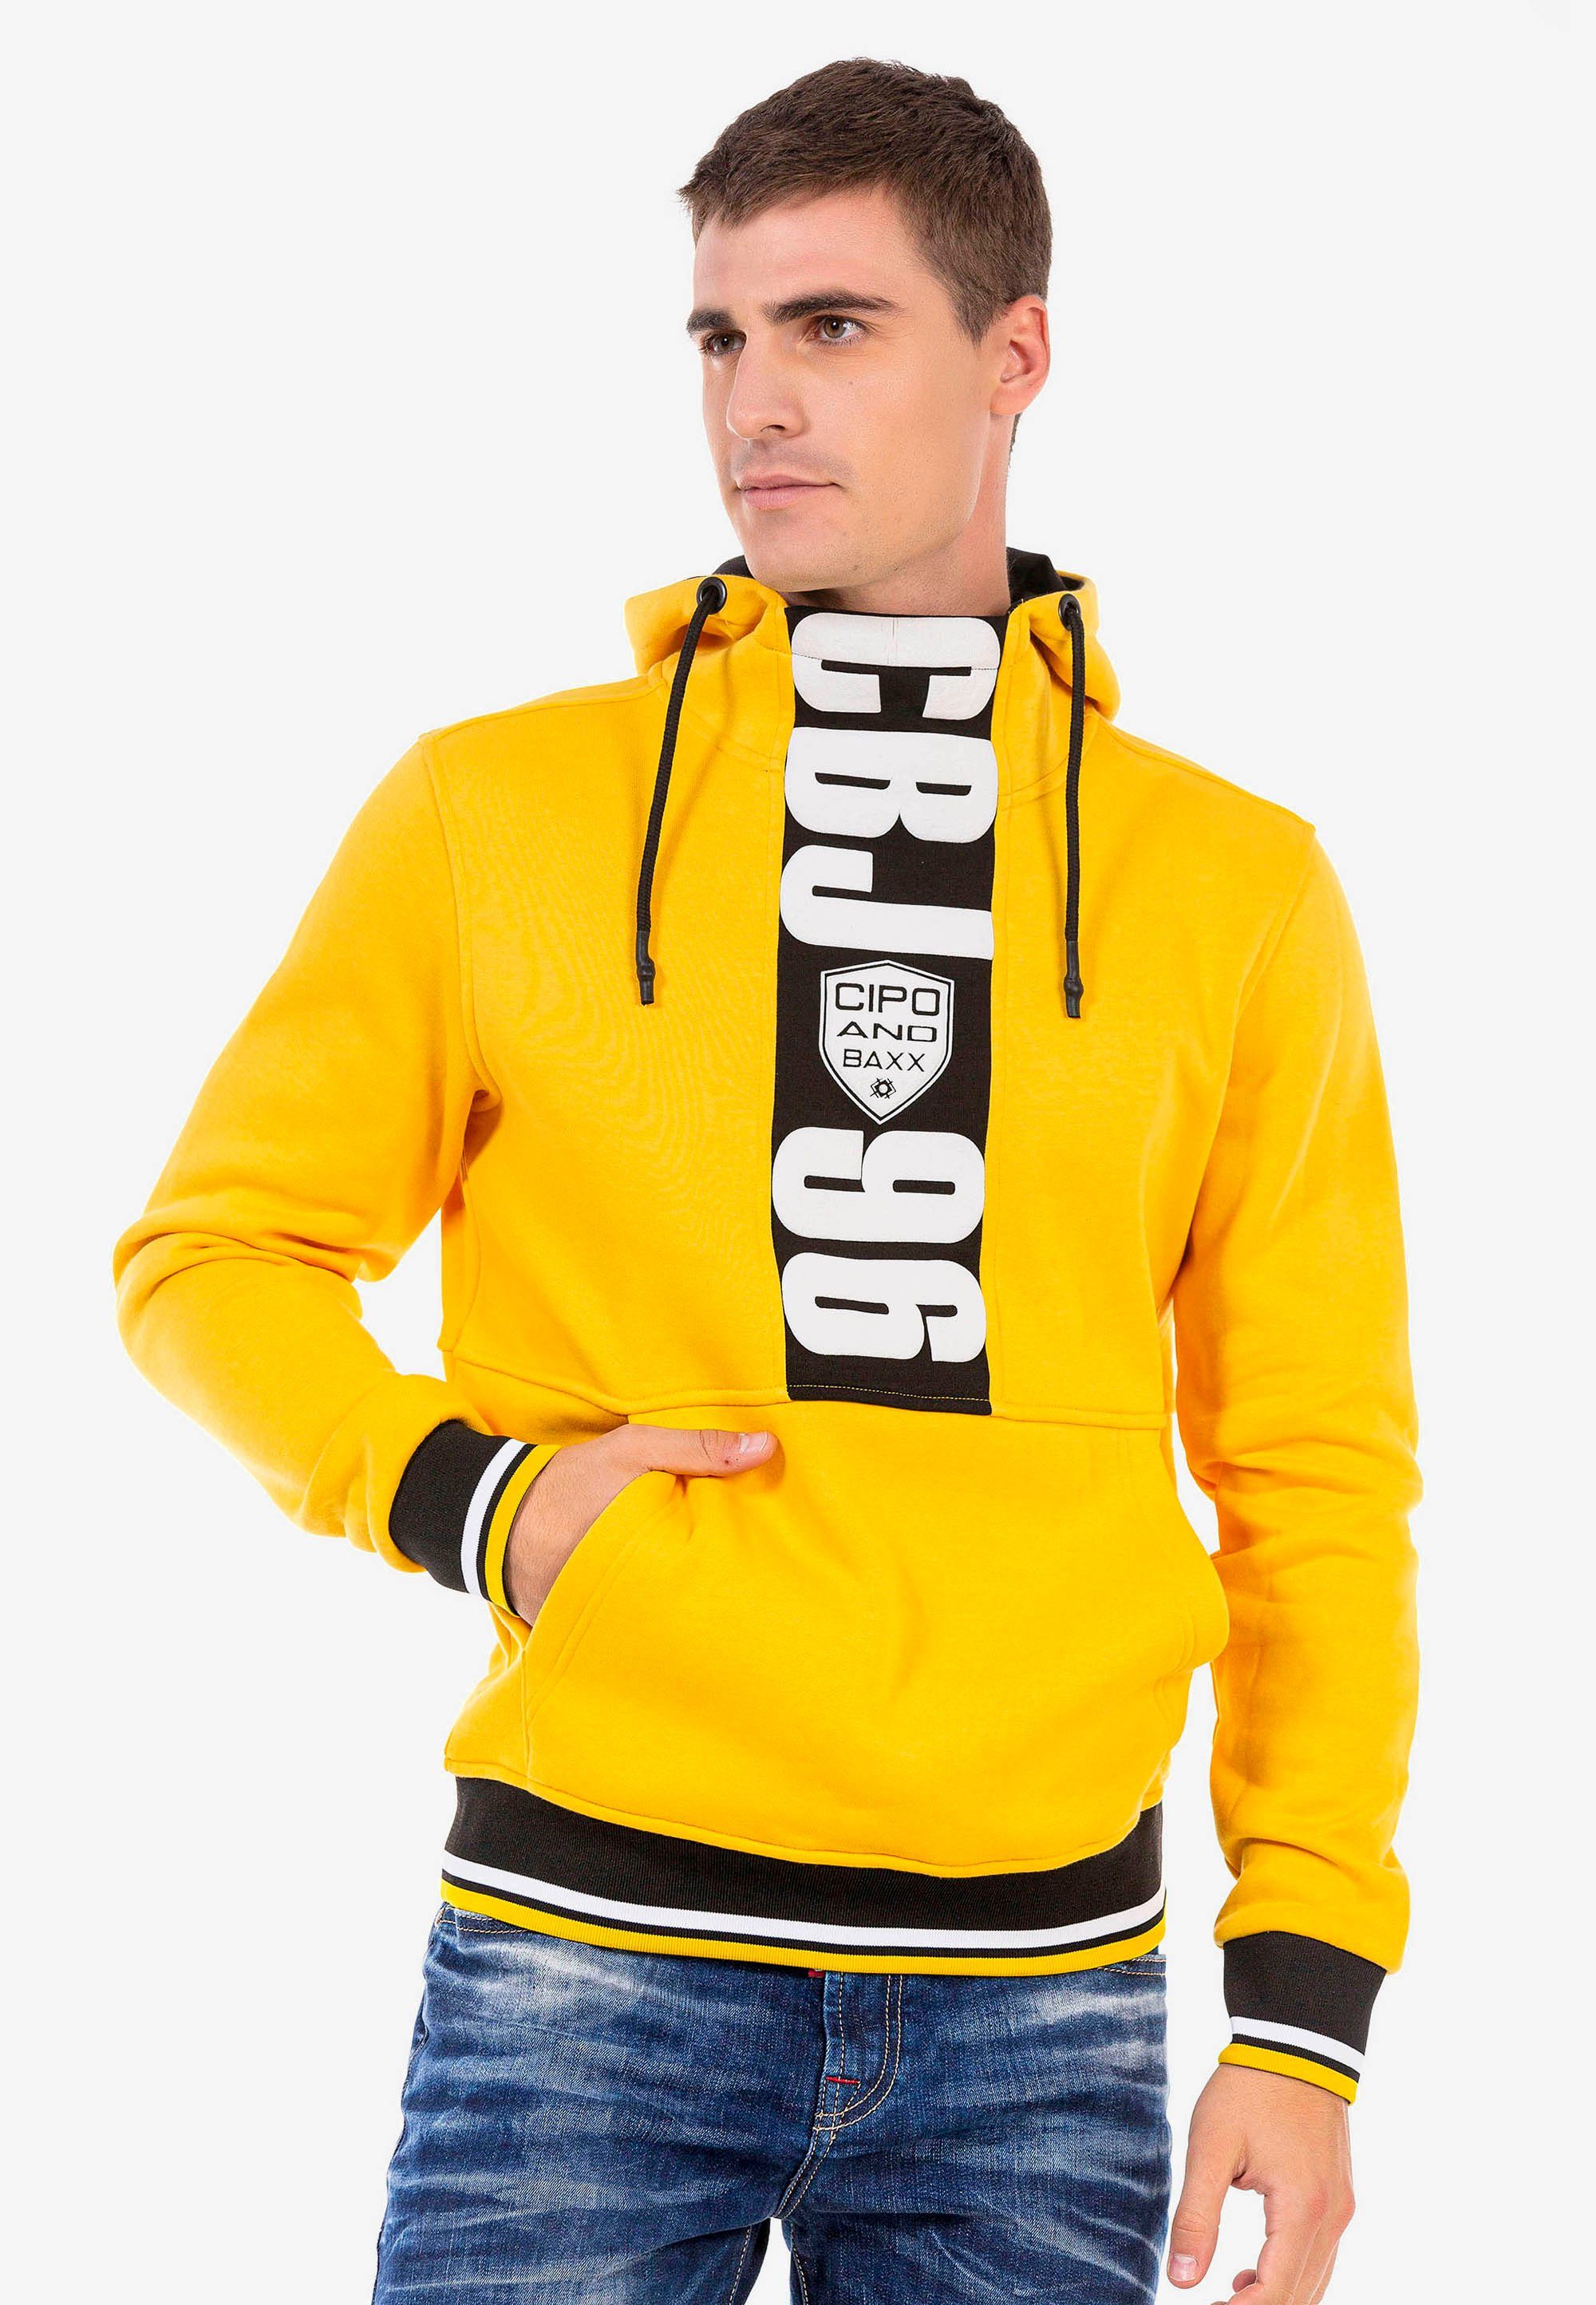 mit Markenprints gelb Kapuzensweatshirt & tollen Baxx Cipo